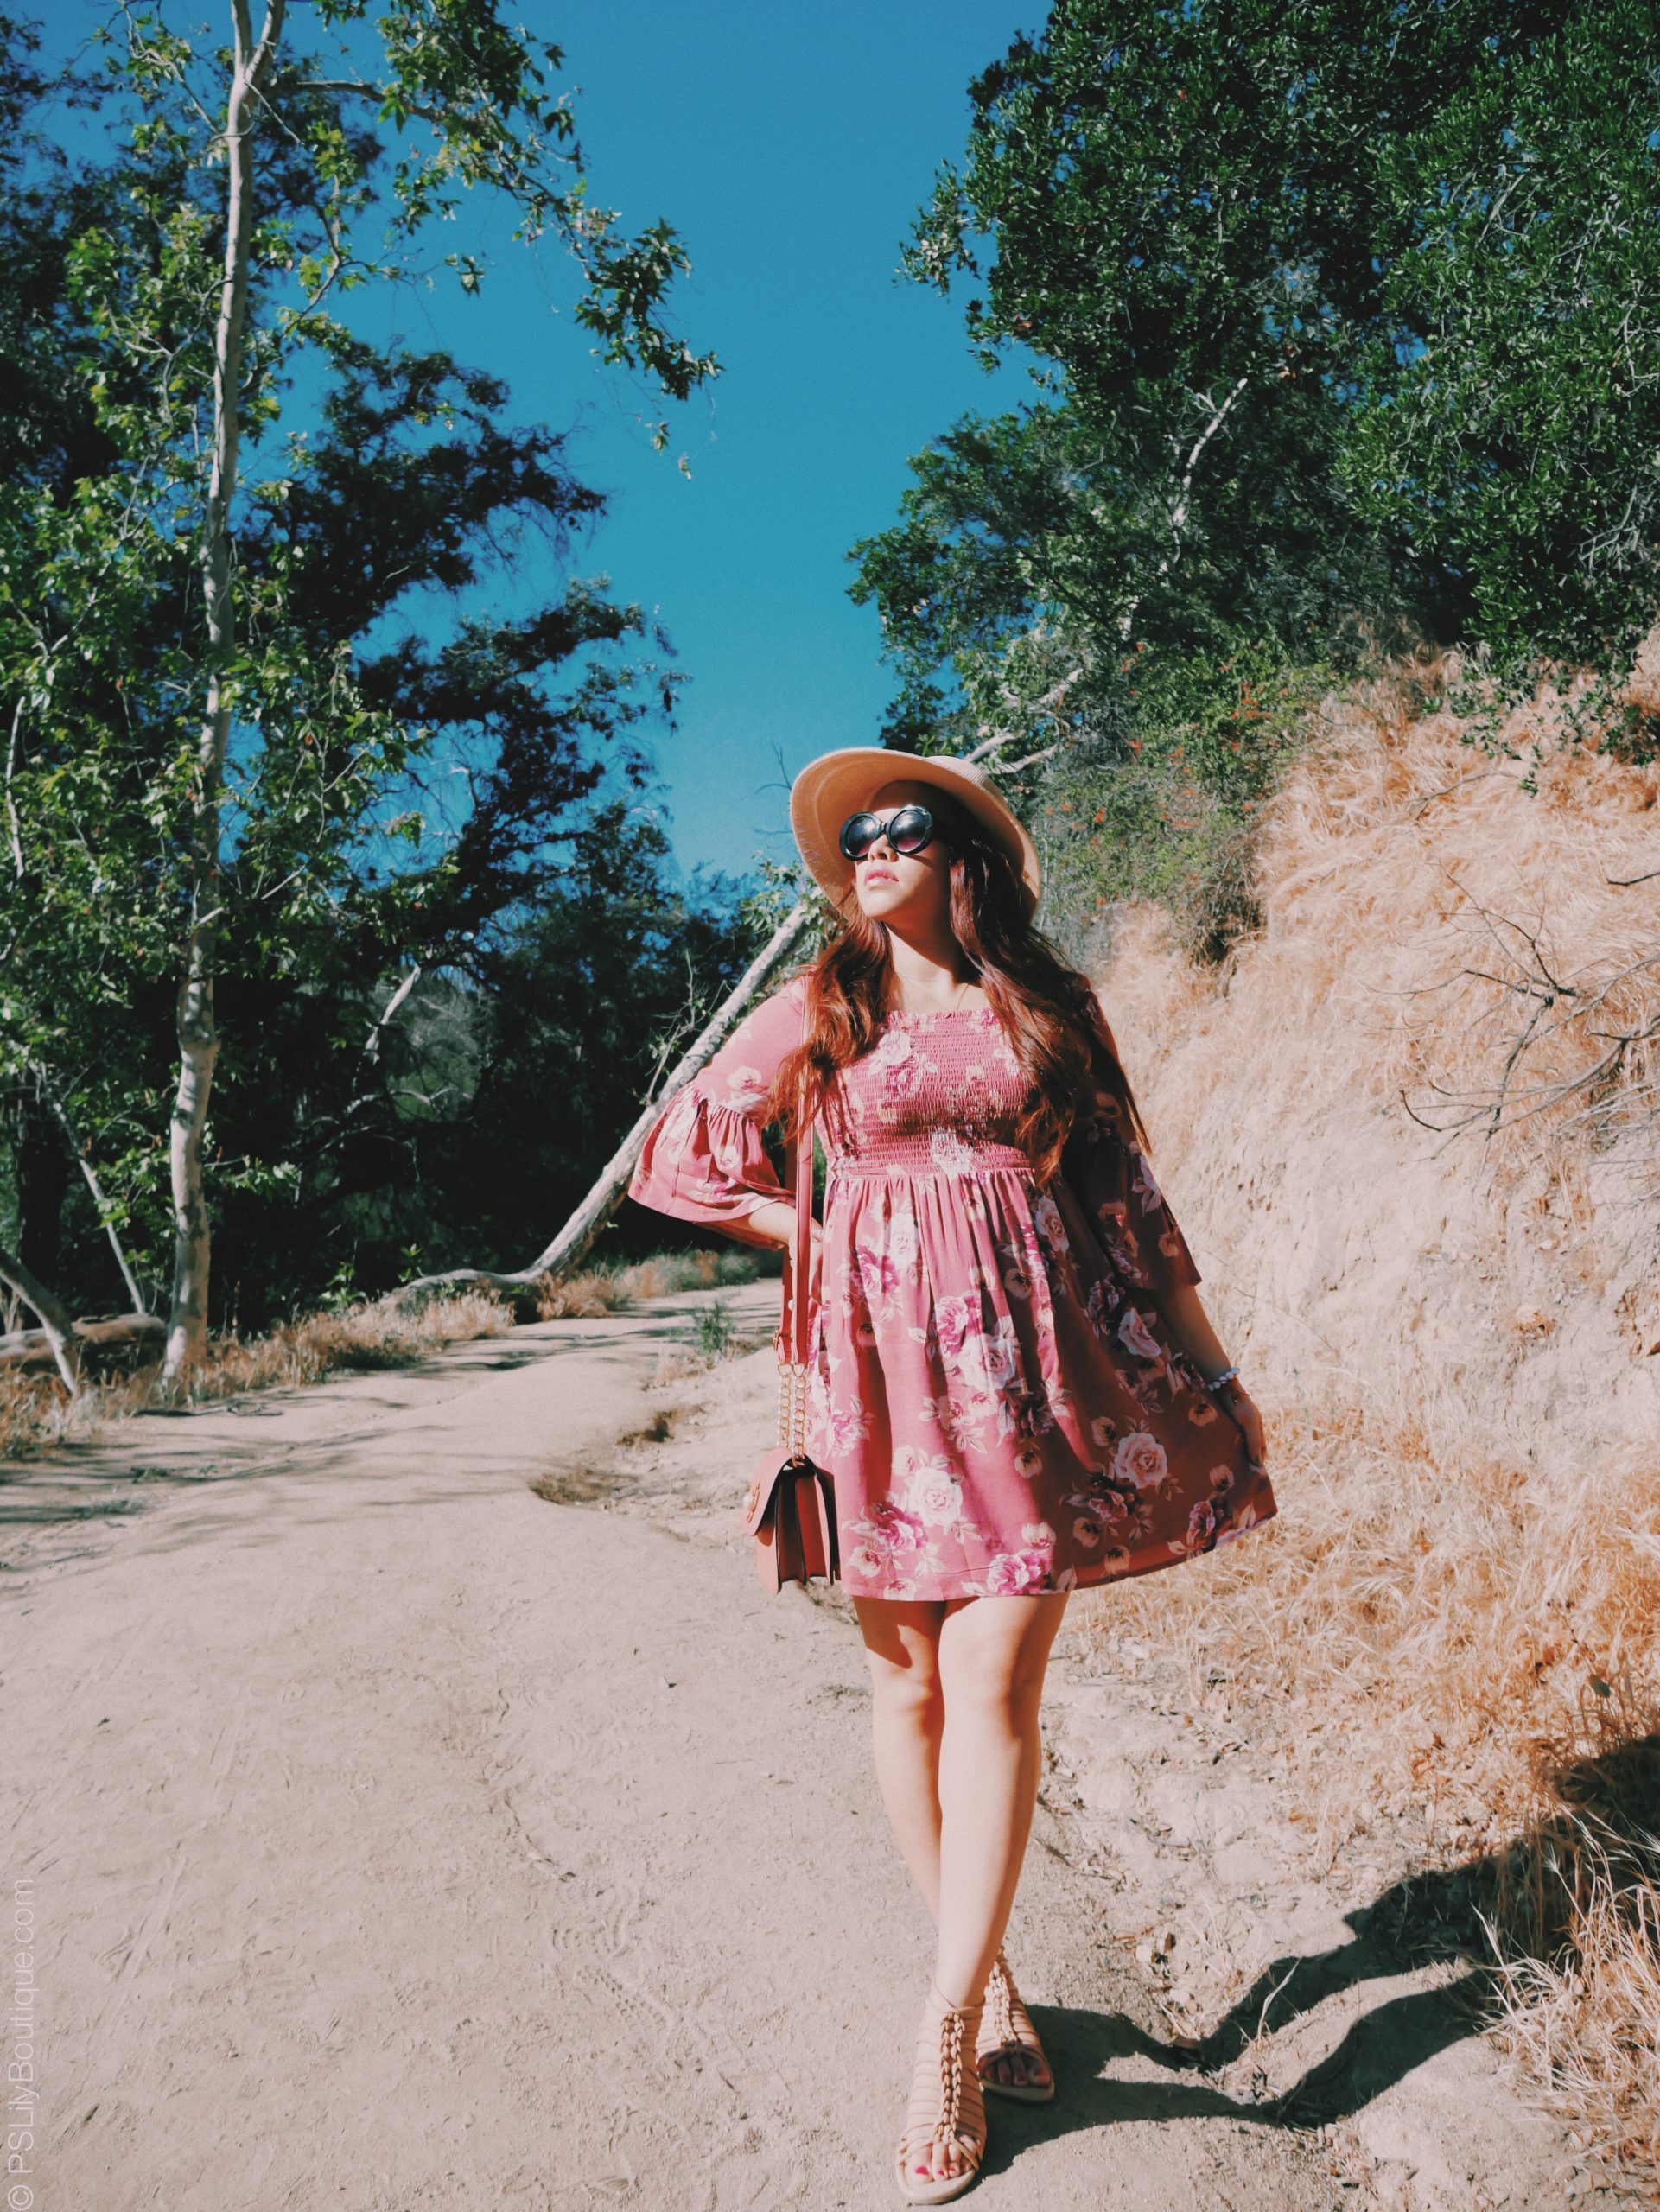  Instagram: @pslilyboutique, Pinterest, Los Angeles fashion blogger, top fashion blog, best fashion blog, fashion & personal style blog, travel blog, travel blogger, LA fashion blogger, Spring & Summer 2018 Outfit Ideas, ootd, 6.4.18